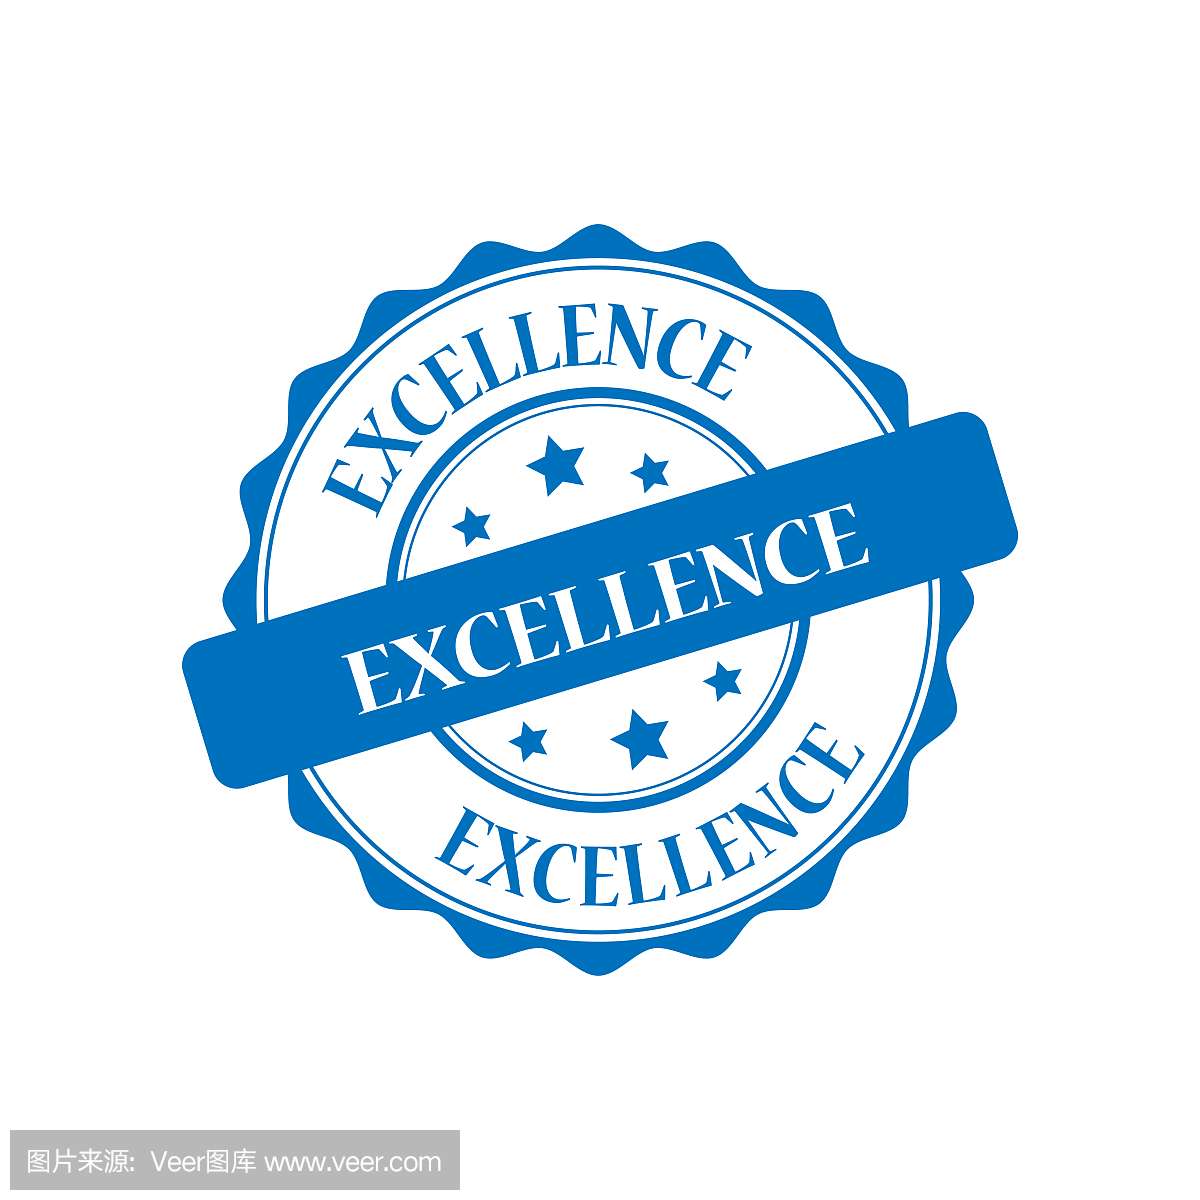 Excellence stamp illustration